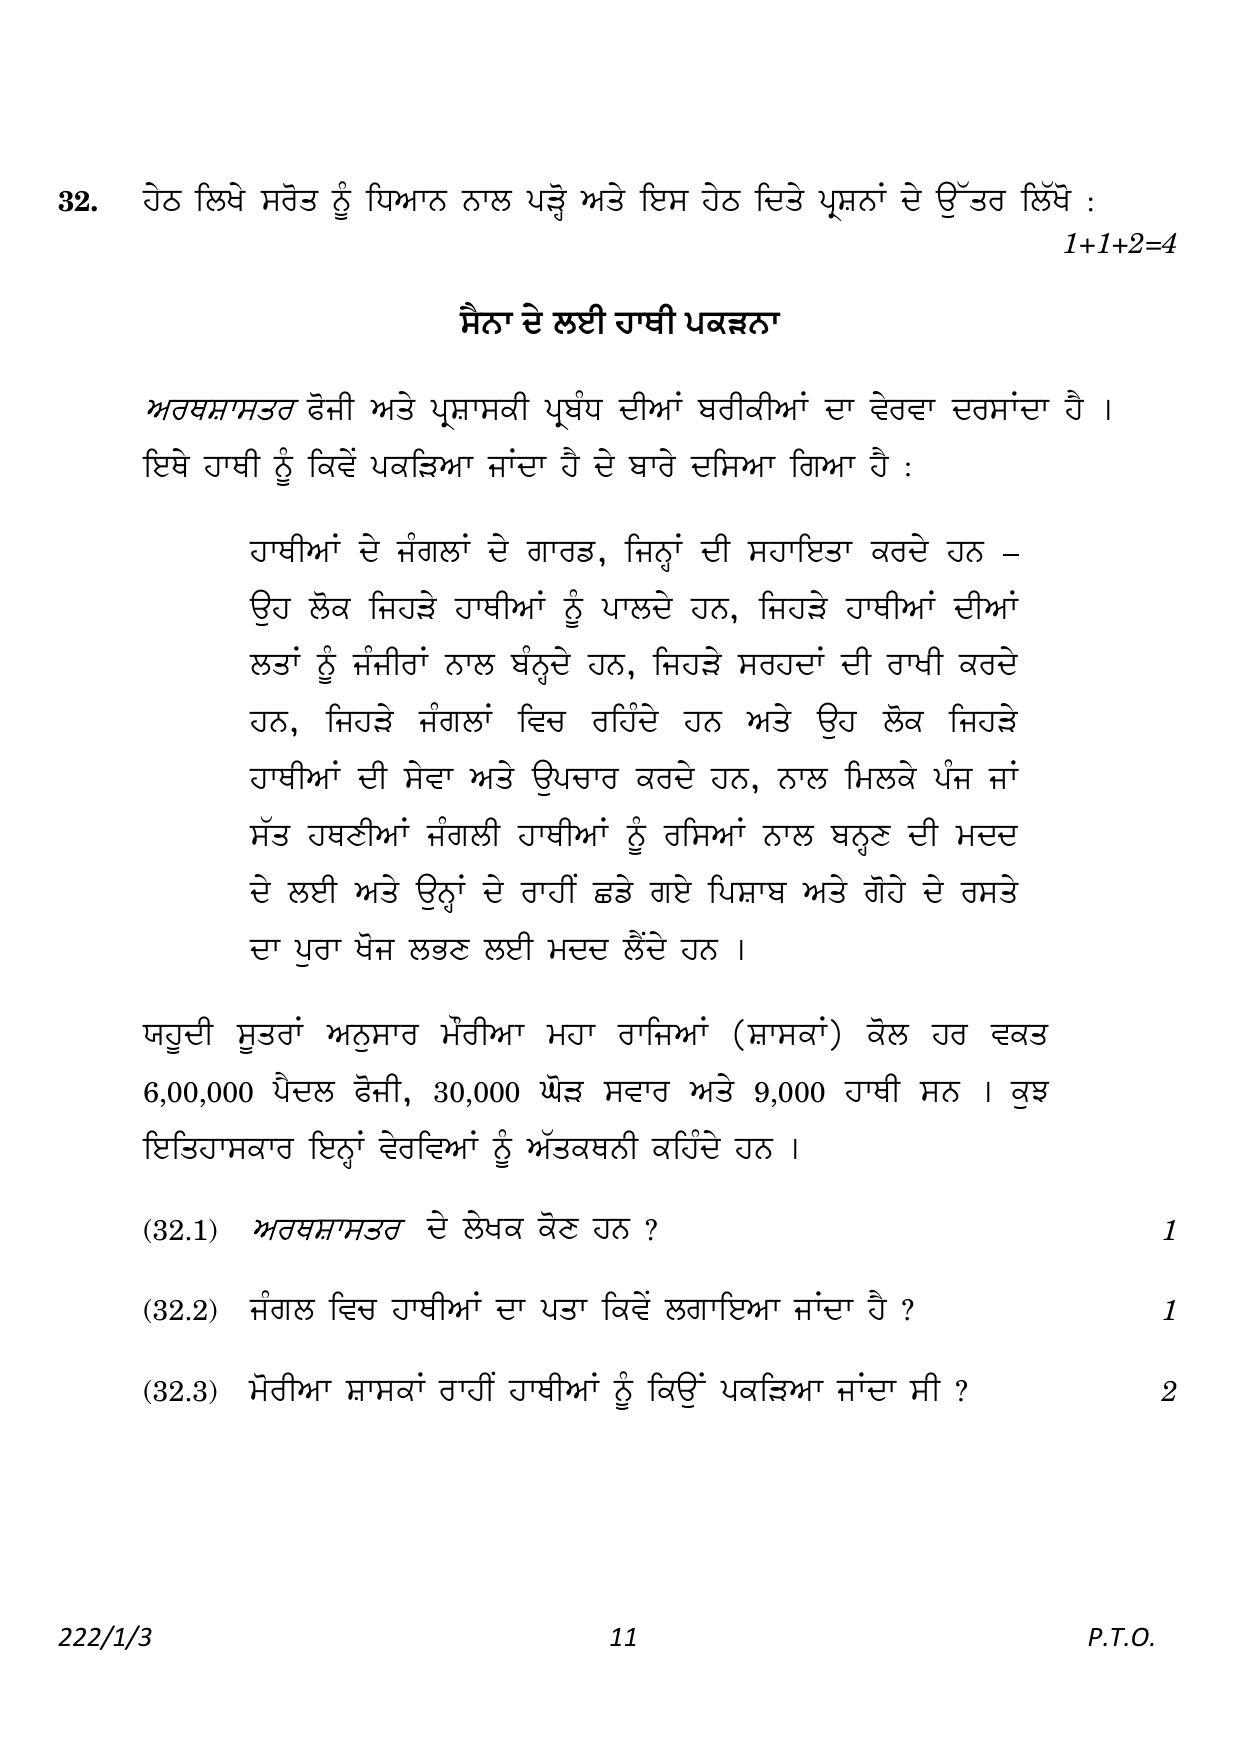 CBSE Class 12 222-1-3 History Punjabi version 2023 Question Paper - Page 11